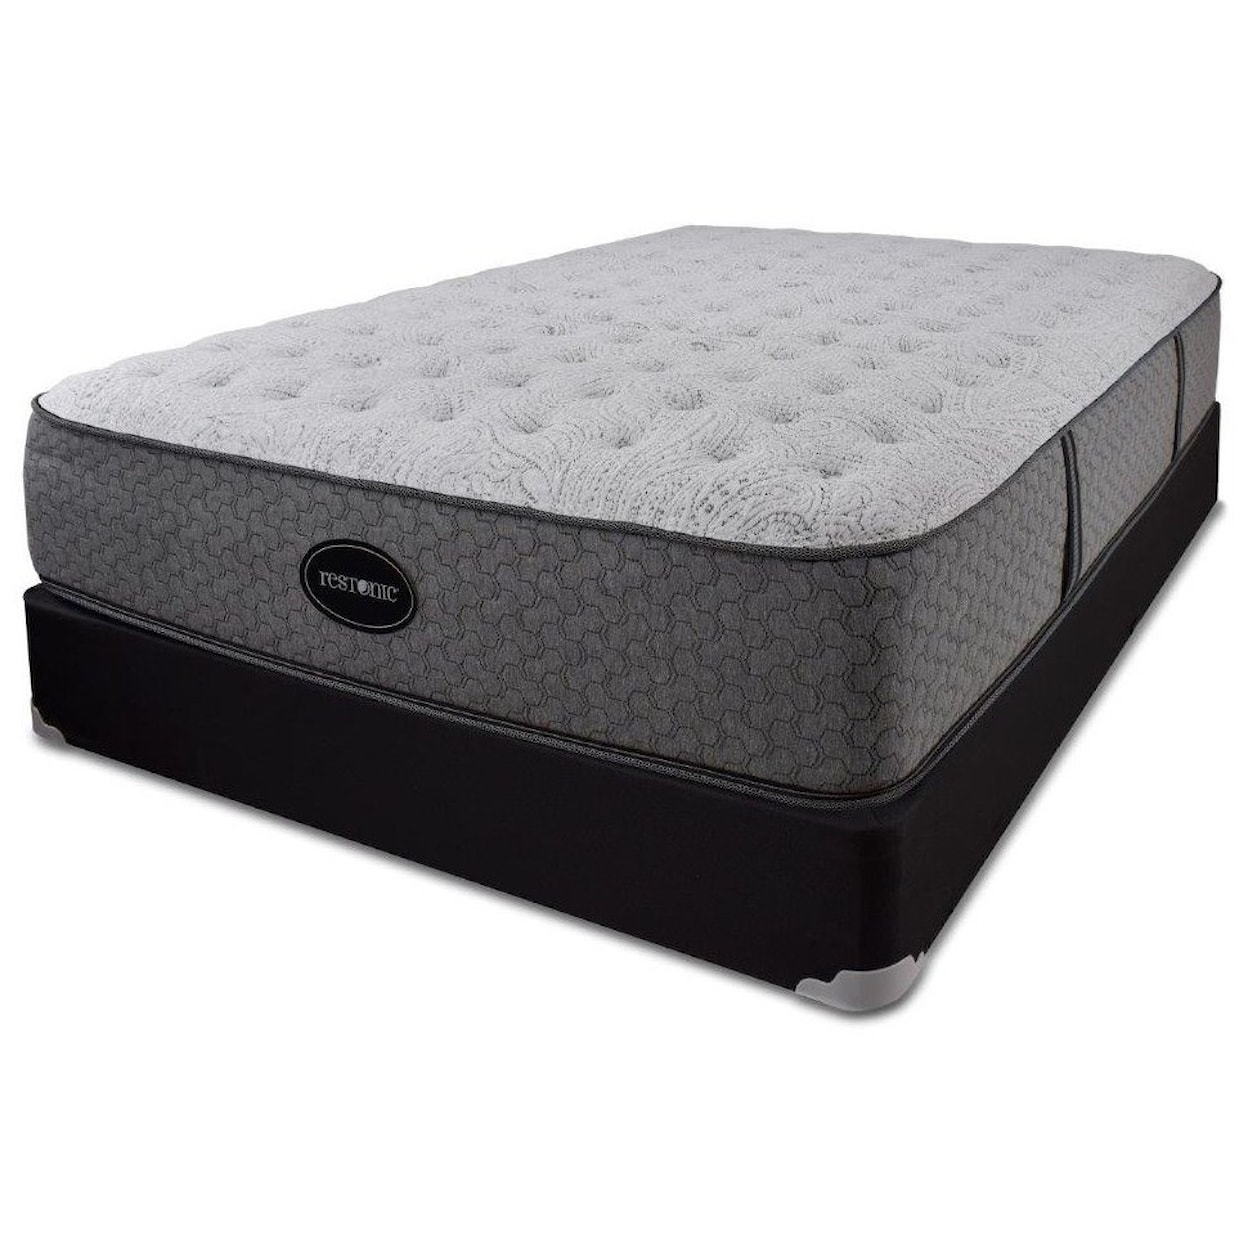 Restonic Blackcomb Cushion Firm Full Comfort Firm Low Profile Set